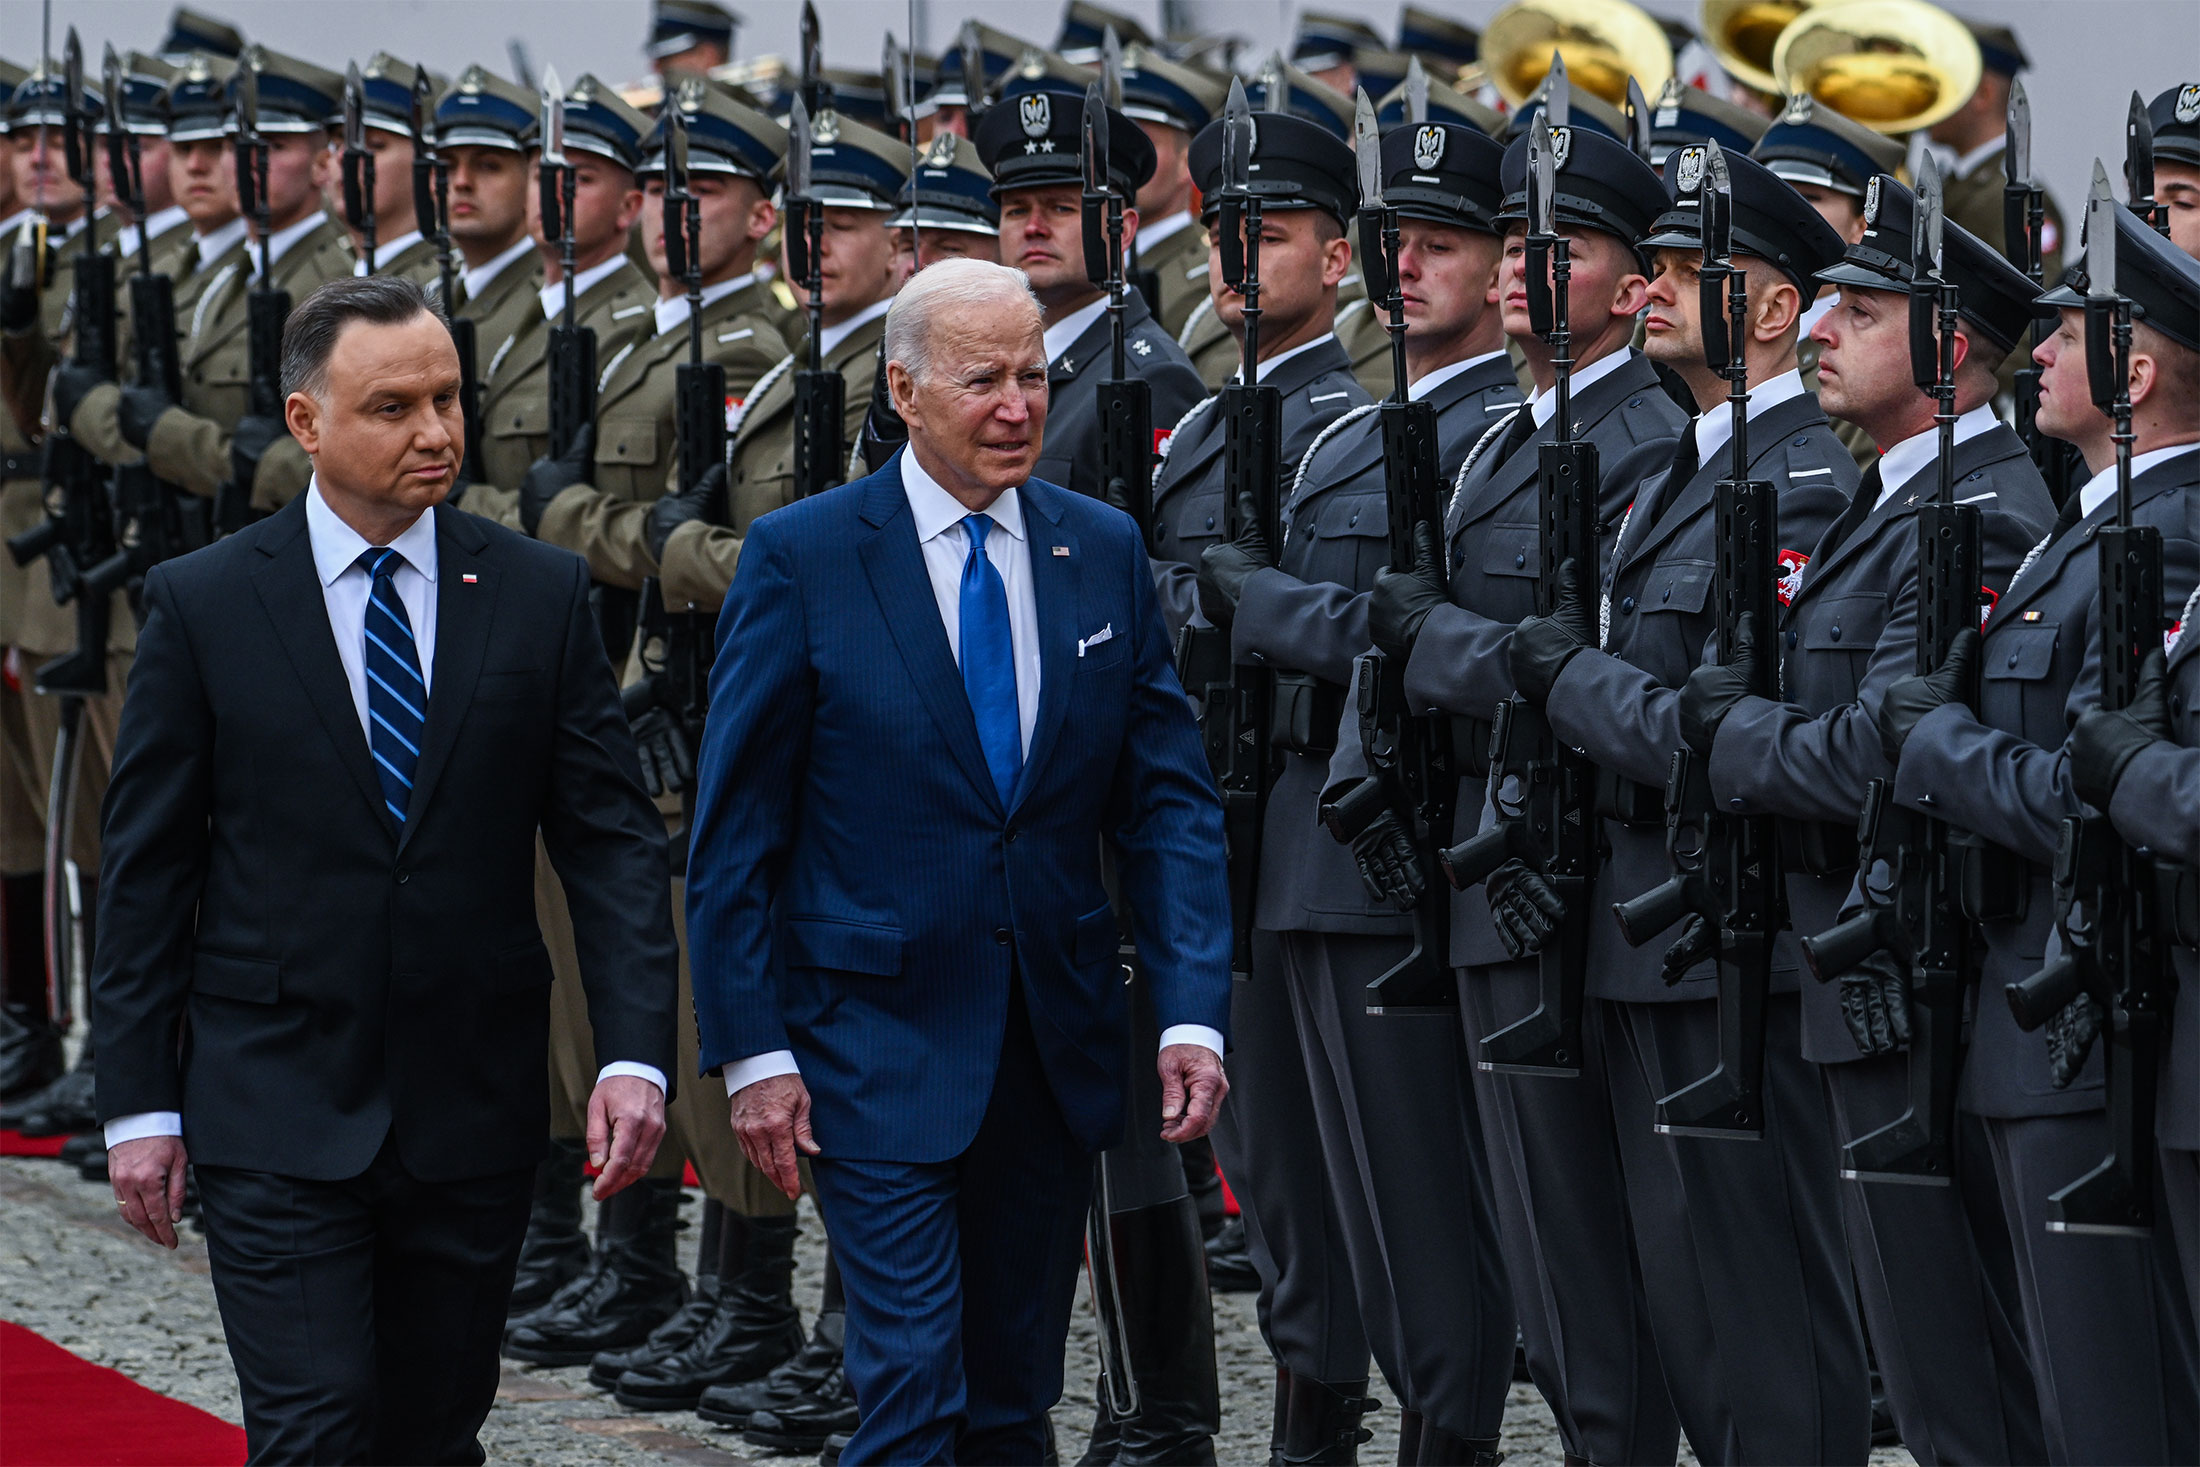 Joe Biden, right, with Polish President&nbsp;Andrzej Duda&nbsp;in Warsaw, Poland on&nbsp;March 26, 2022.